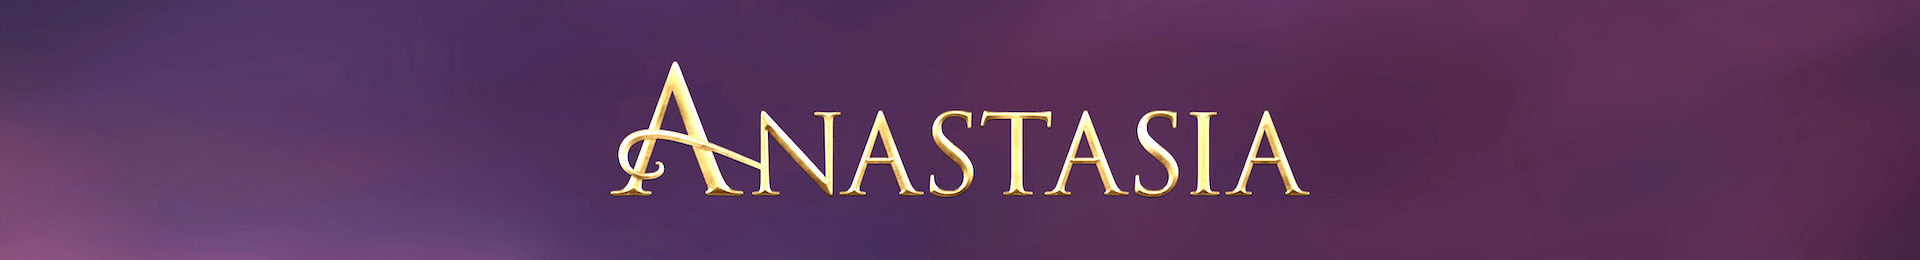 Anastasia banner image